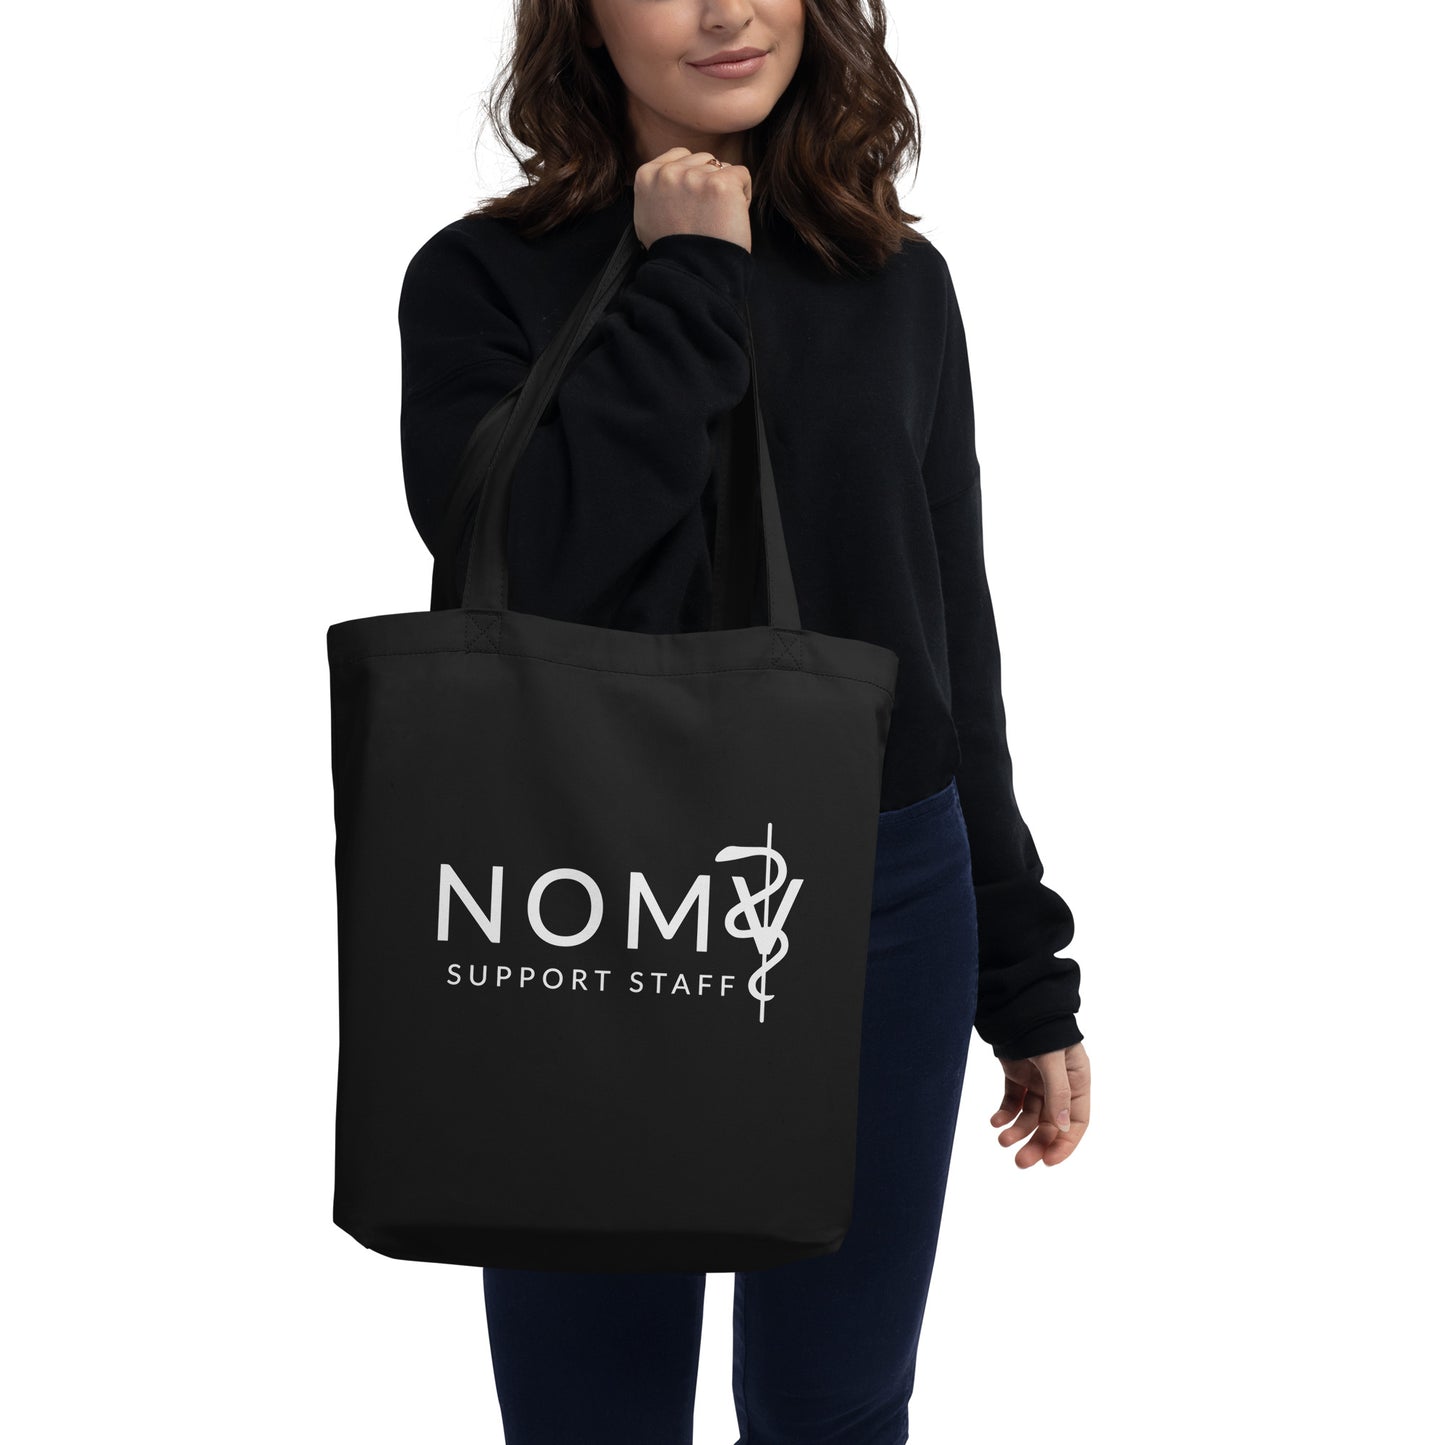 NOMV Support Staff - Eco Tote Bag